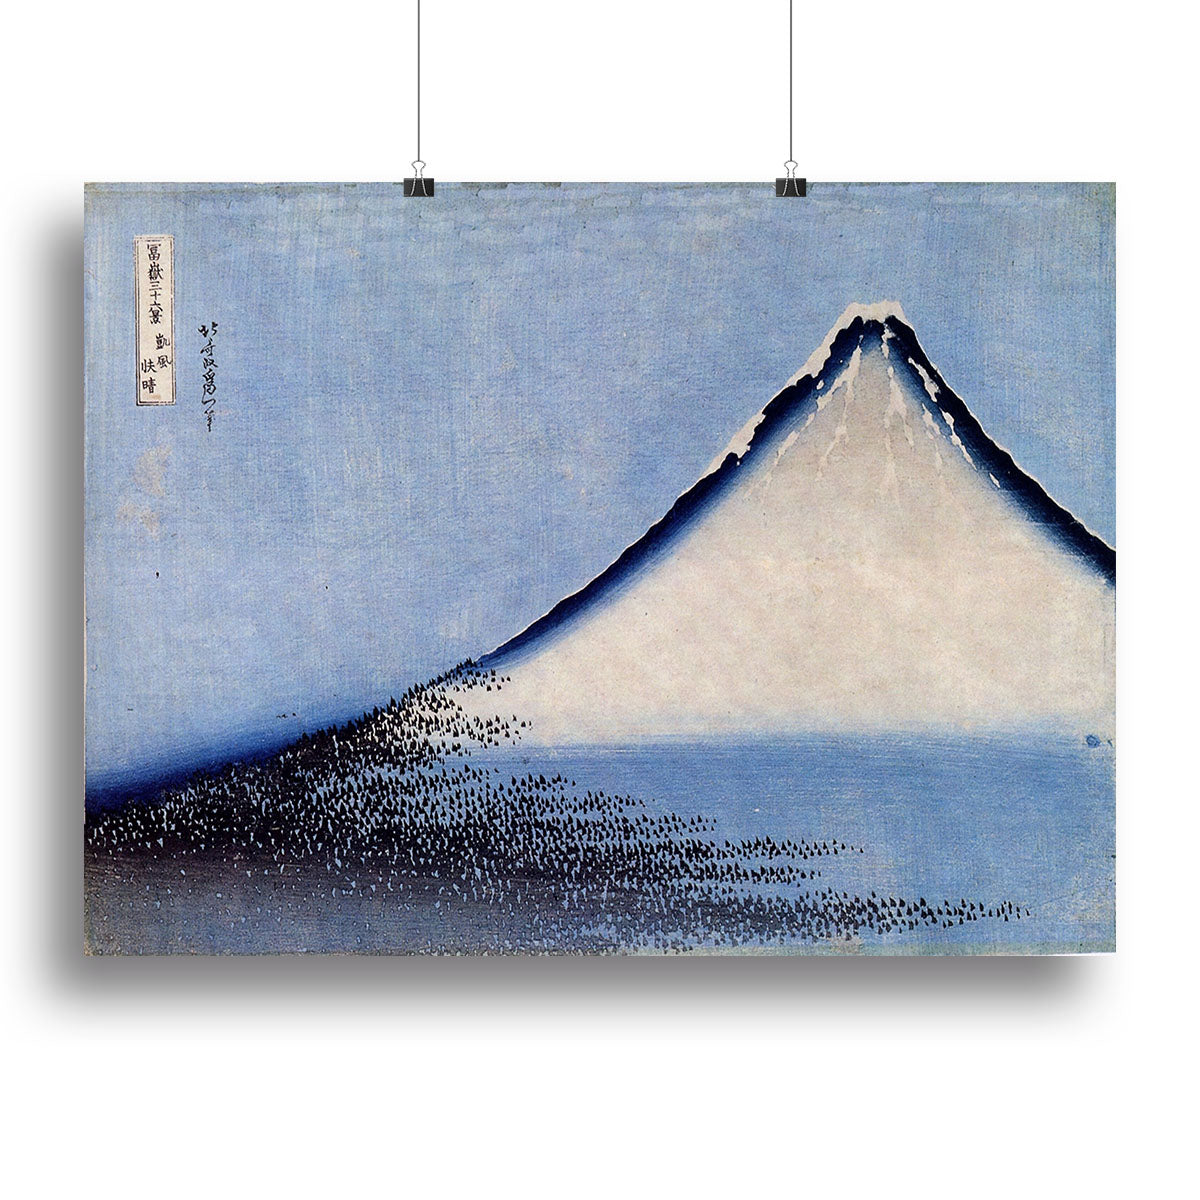 Mount Fuji 2 by Hokusai Canvas Print or Poster - Canvas Art Rocks - 2